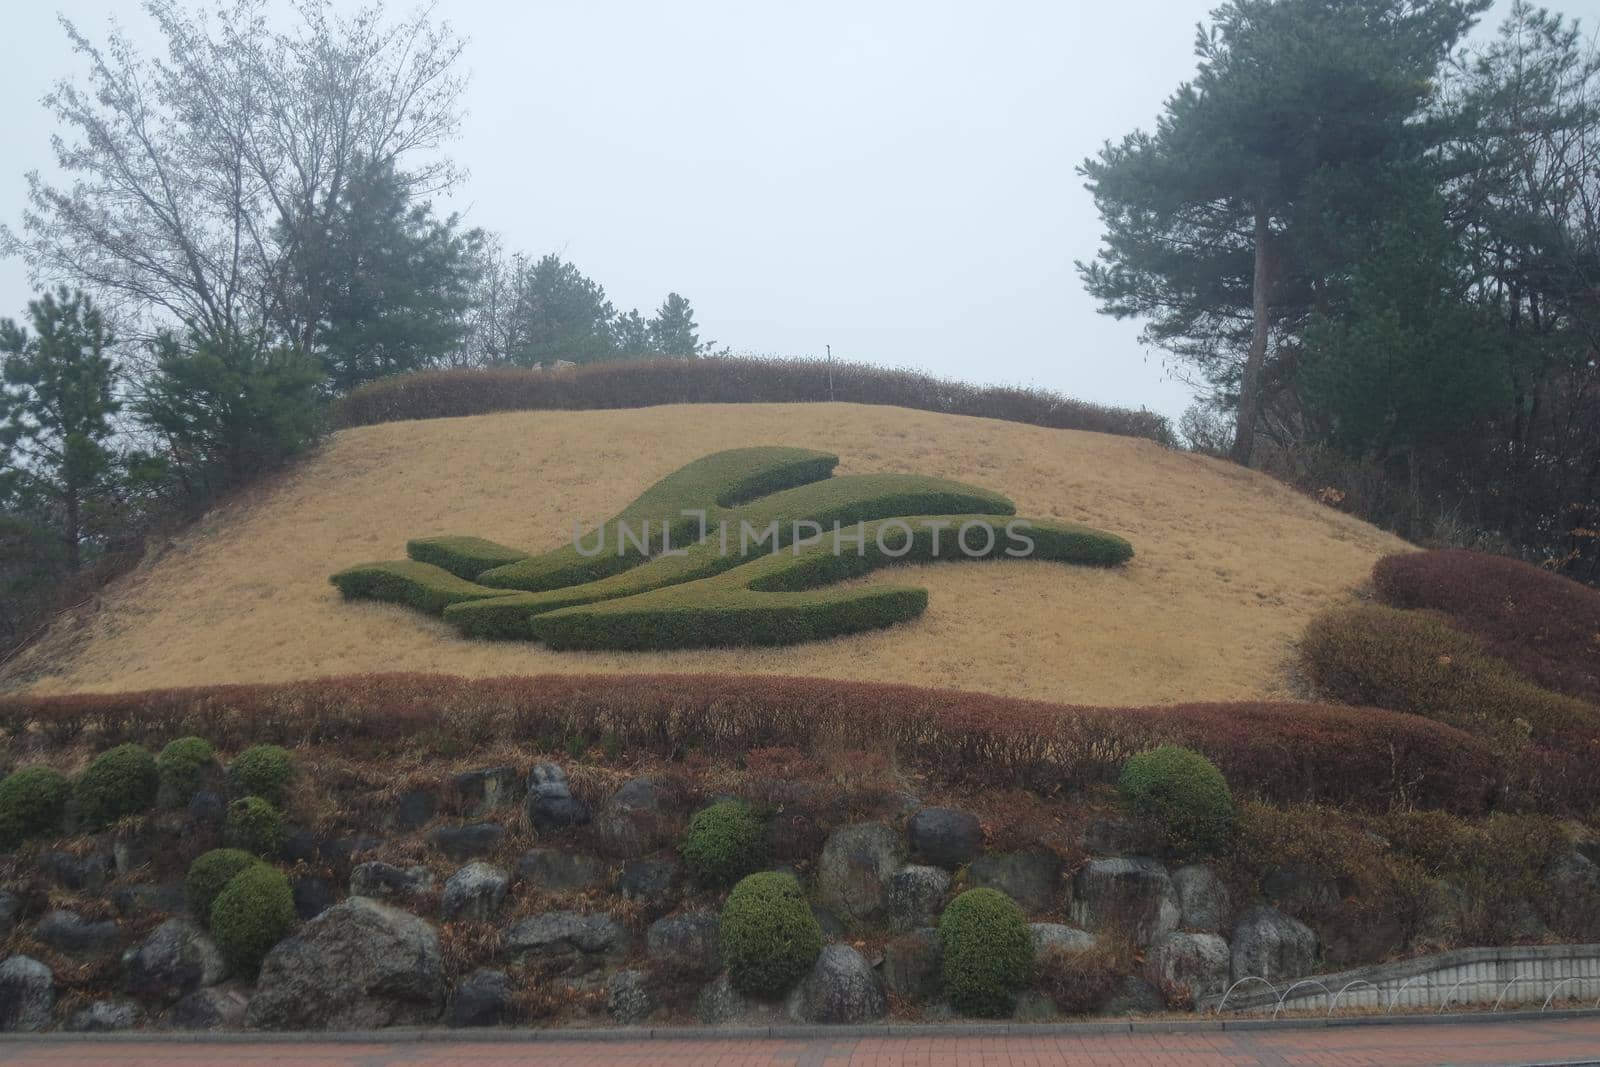 A beautiful grass cutting shape on a small mountain by Photochowk